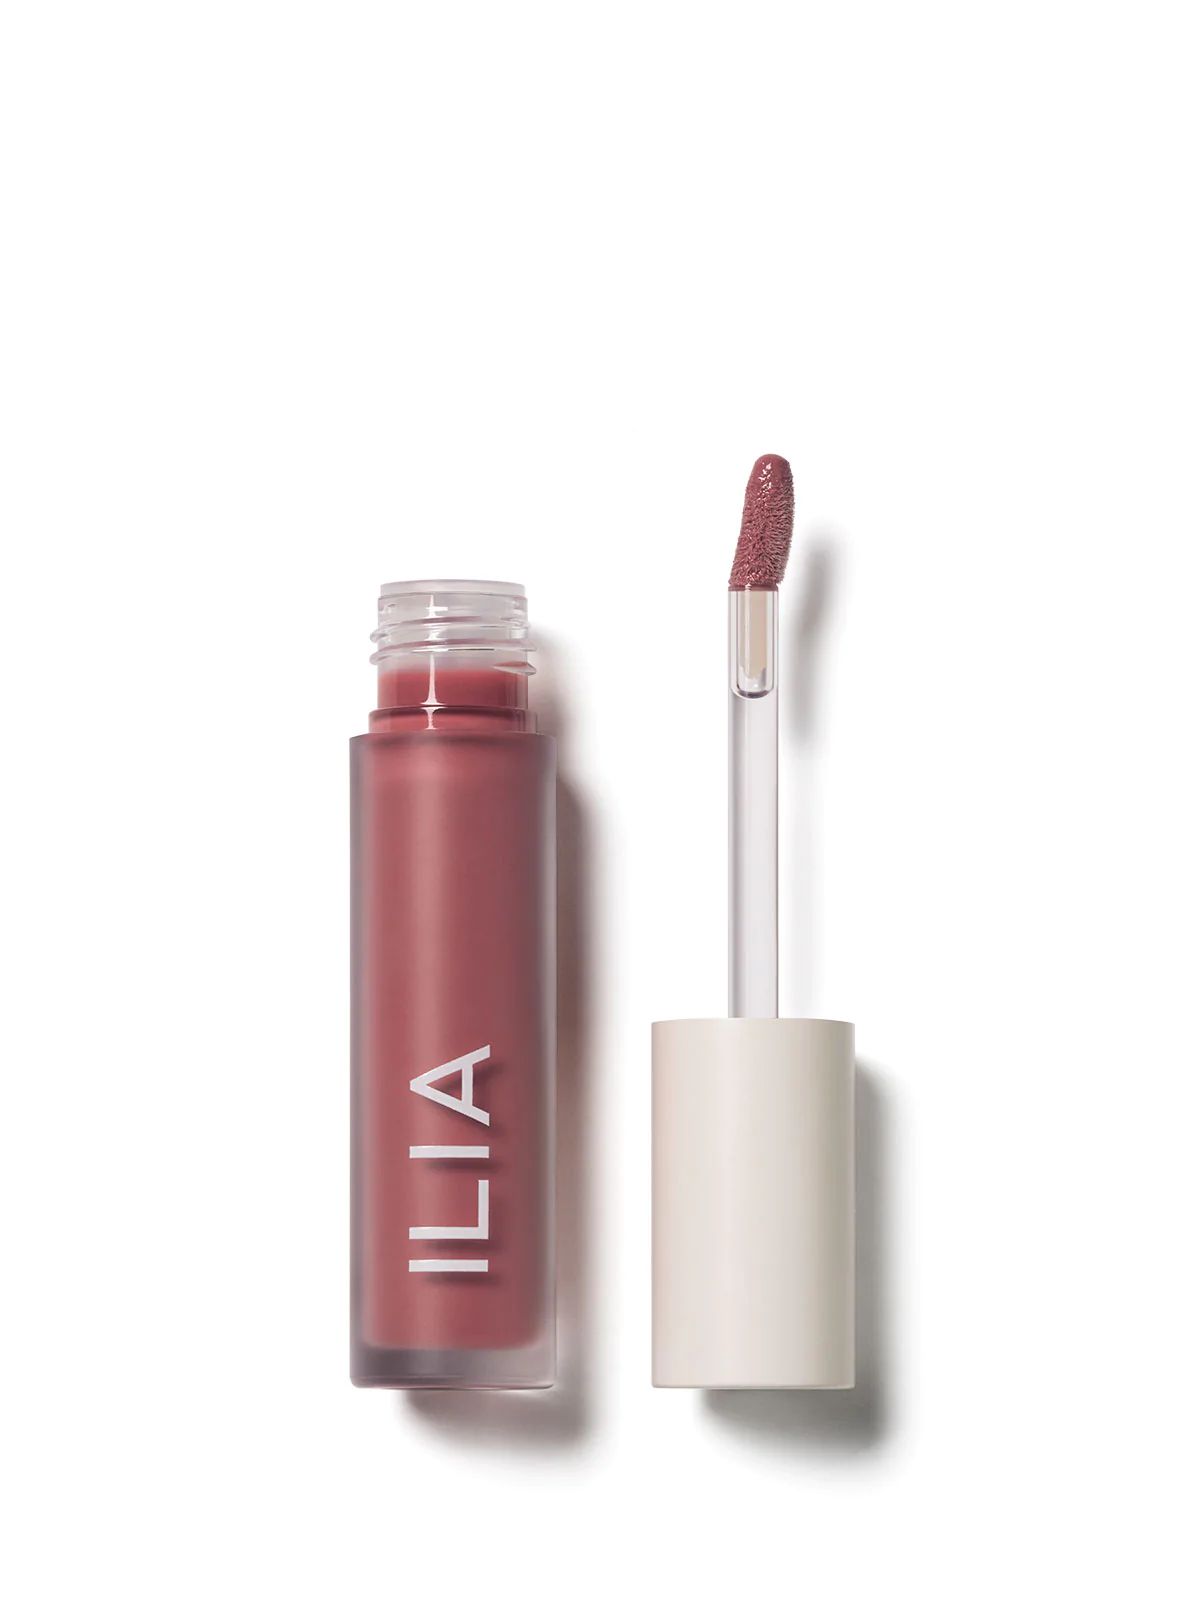 ILIA Balmy Gloss: Berry Mauve - Tinted Lip Oil | ILIA Beauty | ILIA Beauty